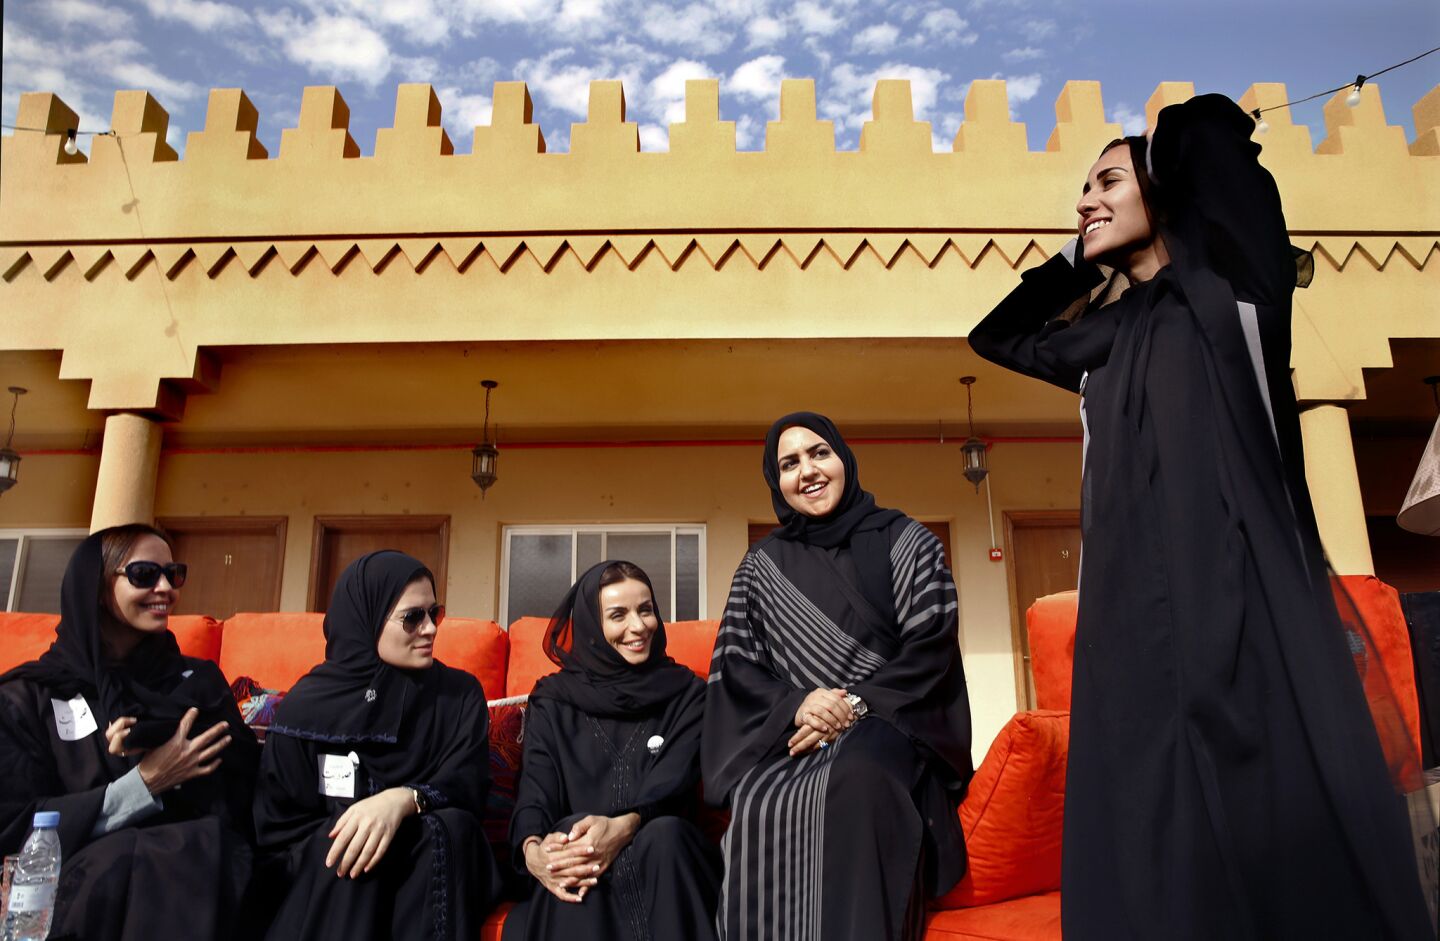 Members of the Al-Nahda Philanthropic Society for Women gather to celebrate the first women's vote in the history of Saudi Arabia. From left are Muneera Altouq, Rasha Alturki, Salma Al-Rasid, Hiba, Al-Zamil, and Sheikha Al-Sudairy.